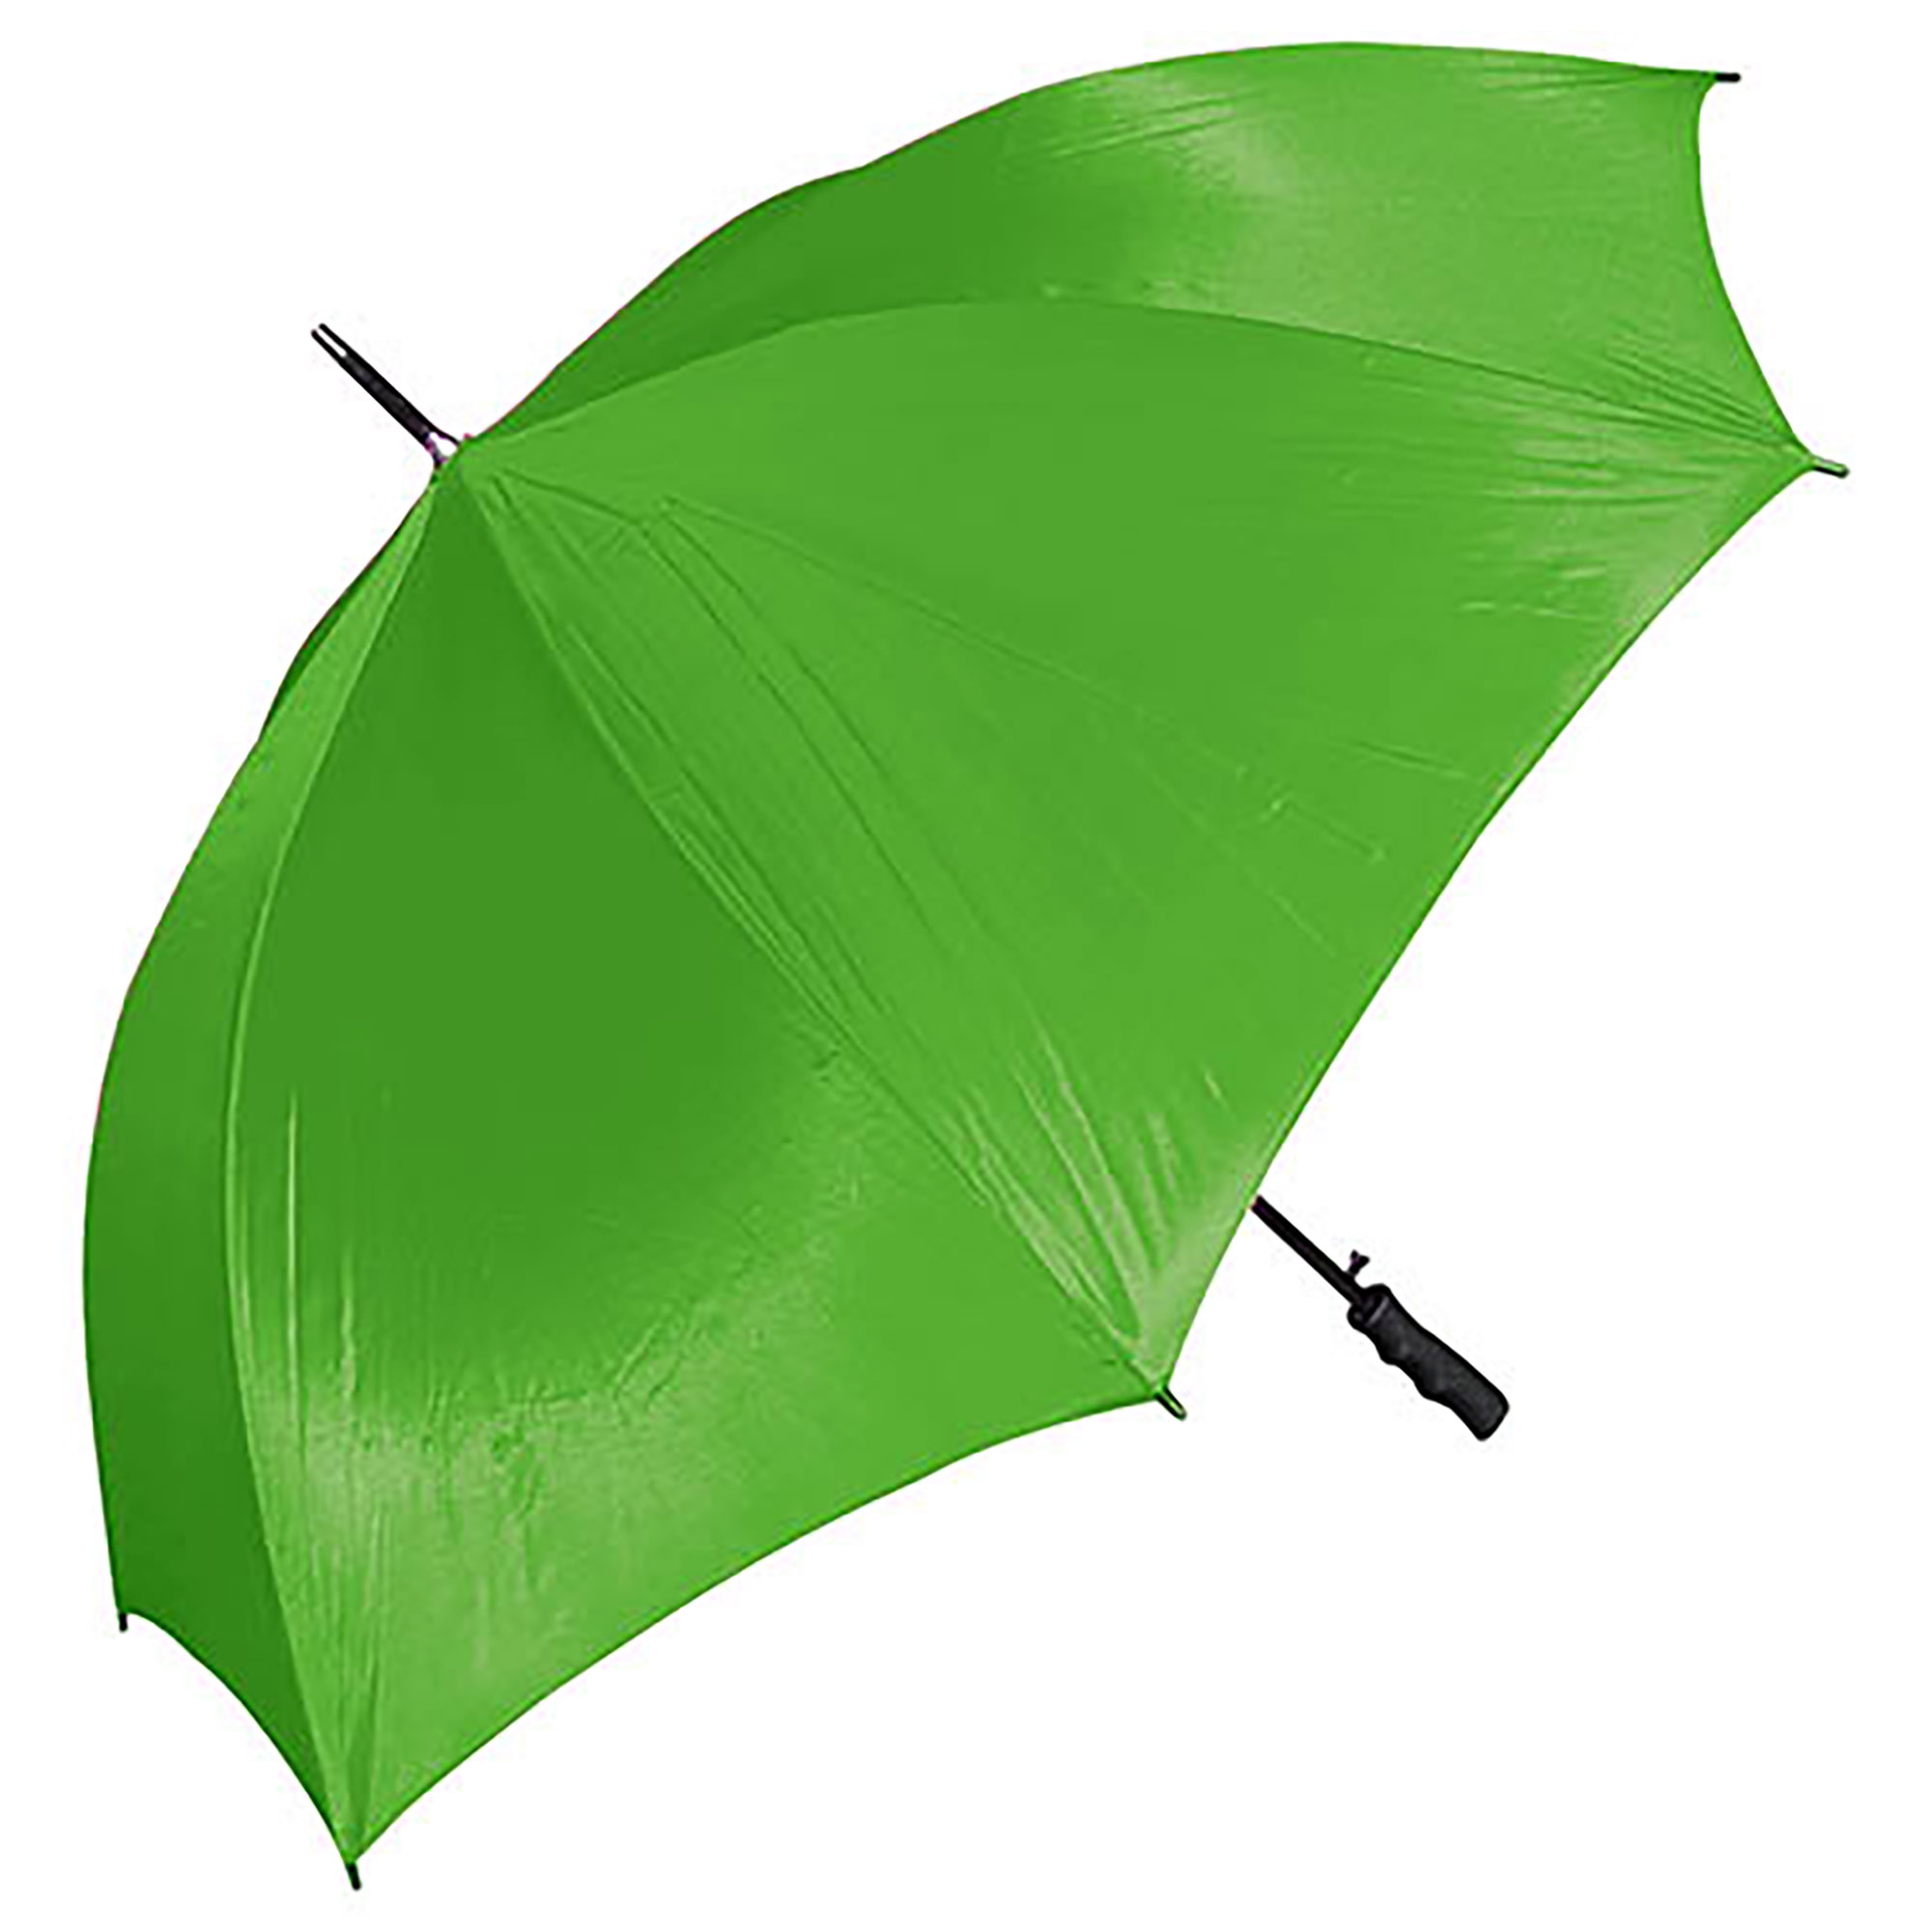 Bulk Promotional Bright Green Sands Umbrella Online In Perth Australia